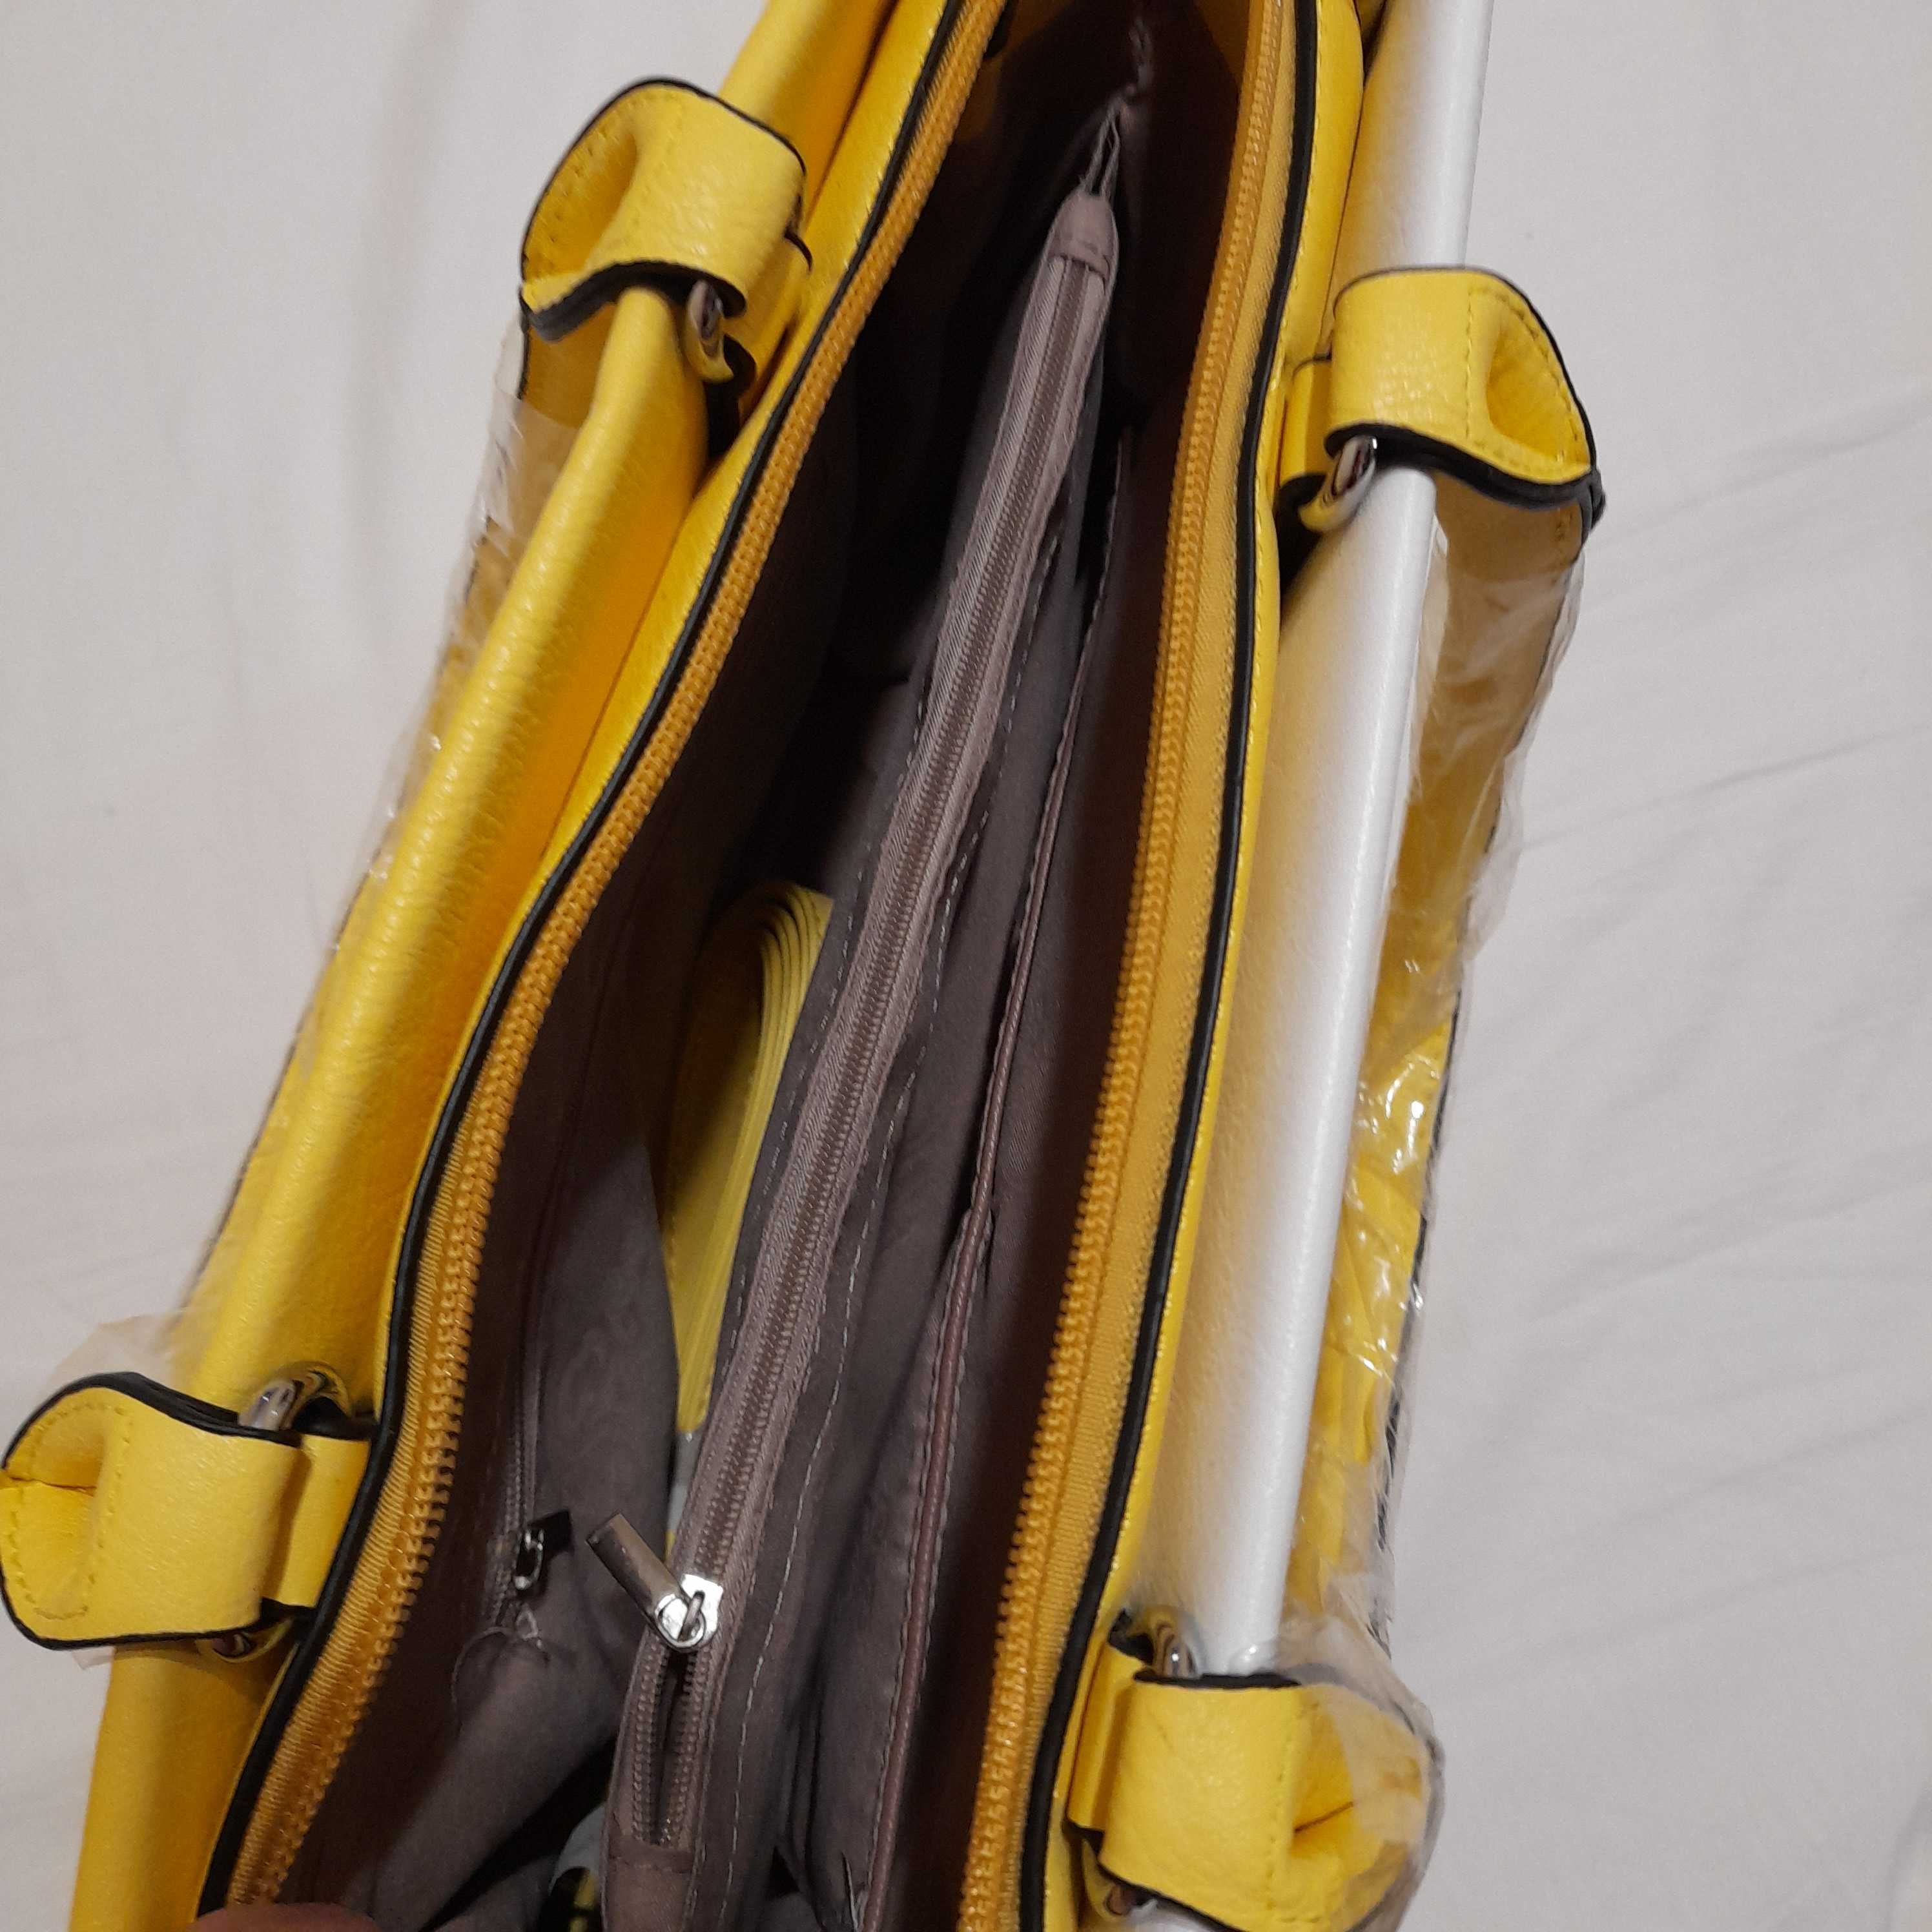 Дамска чанта жълта